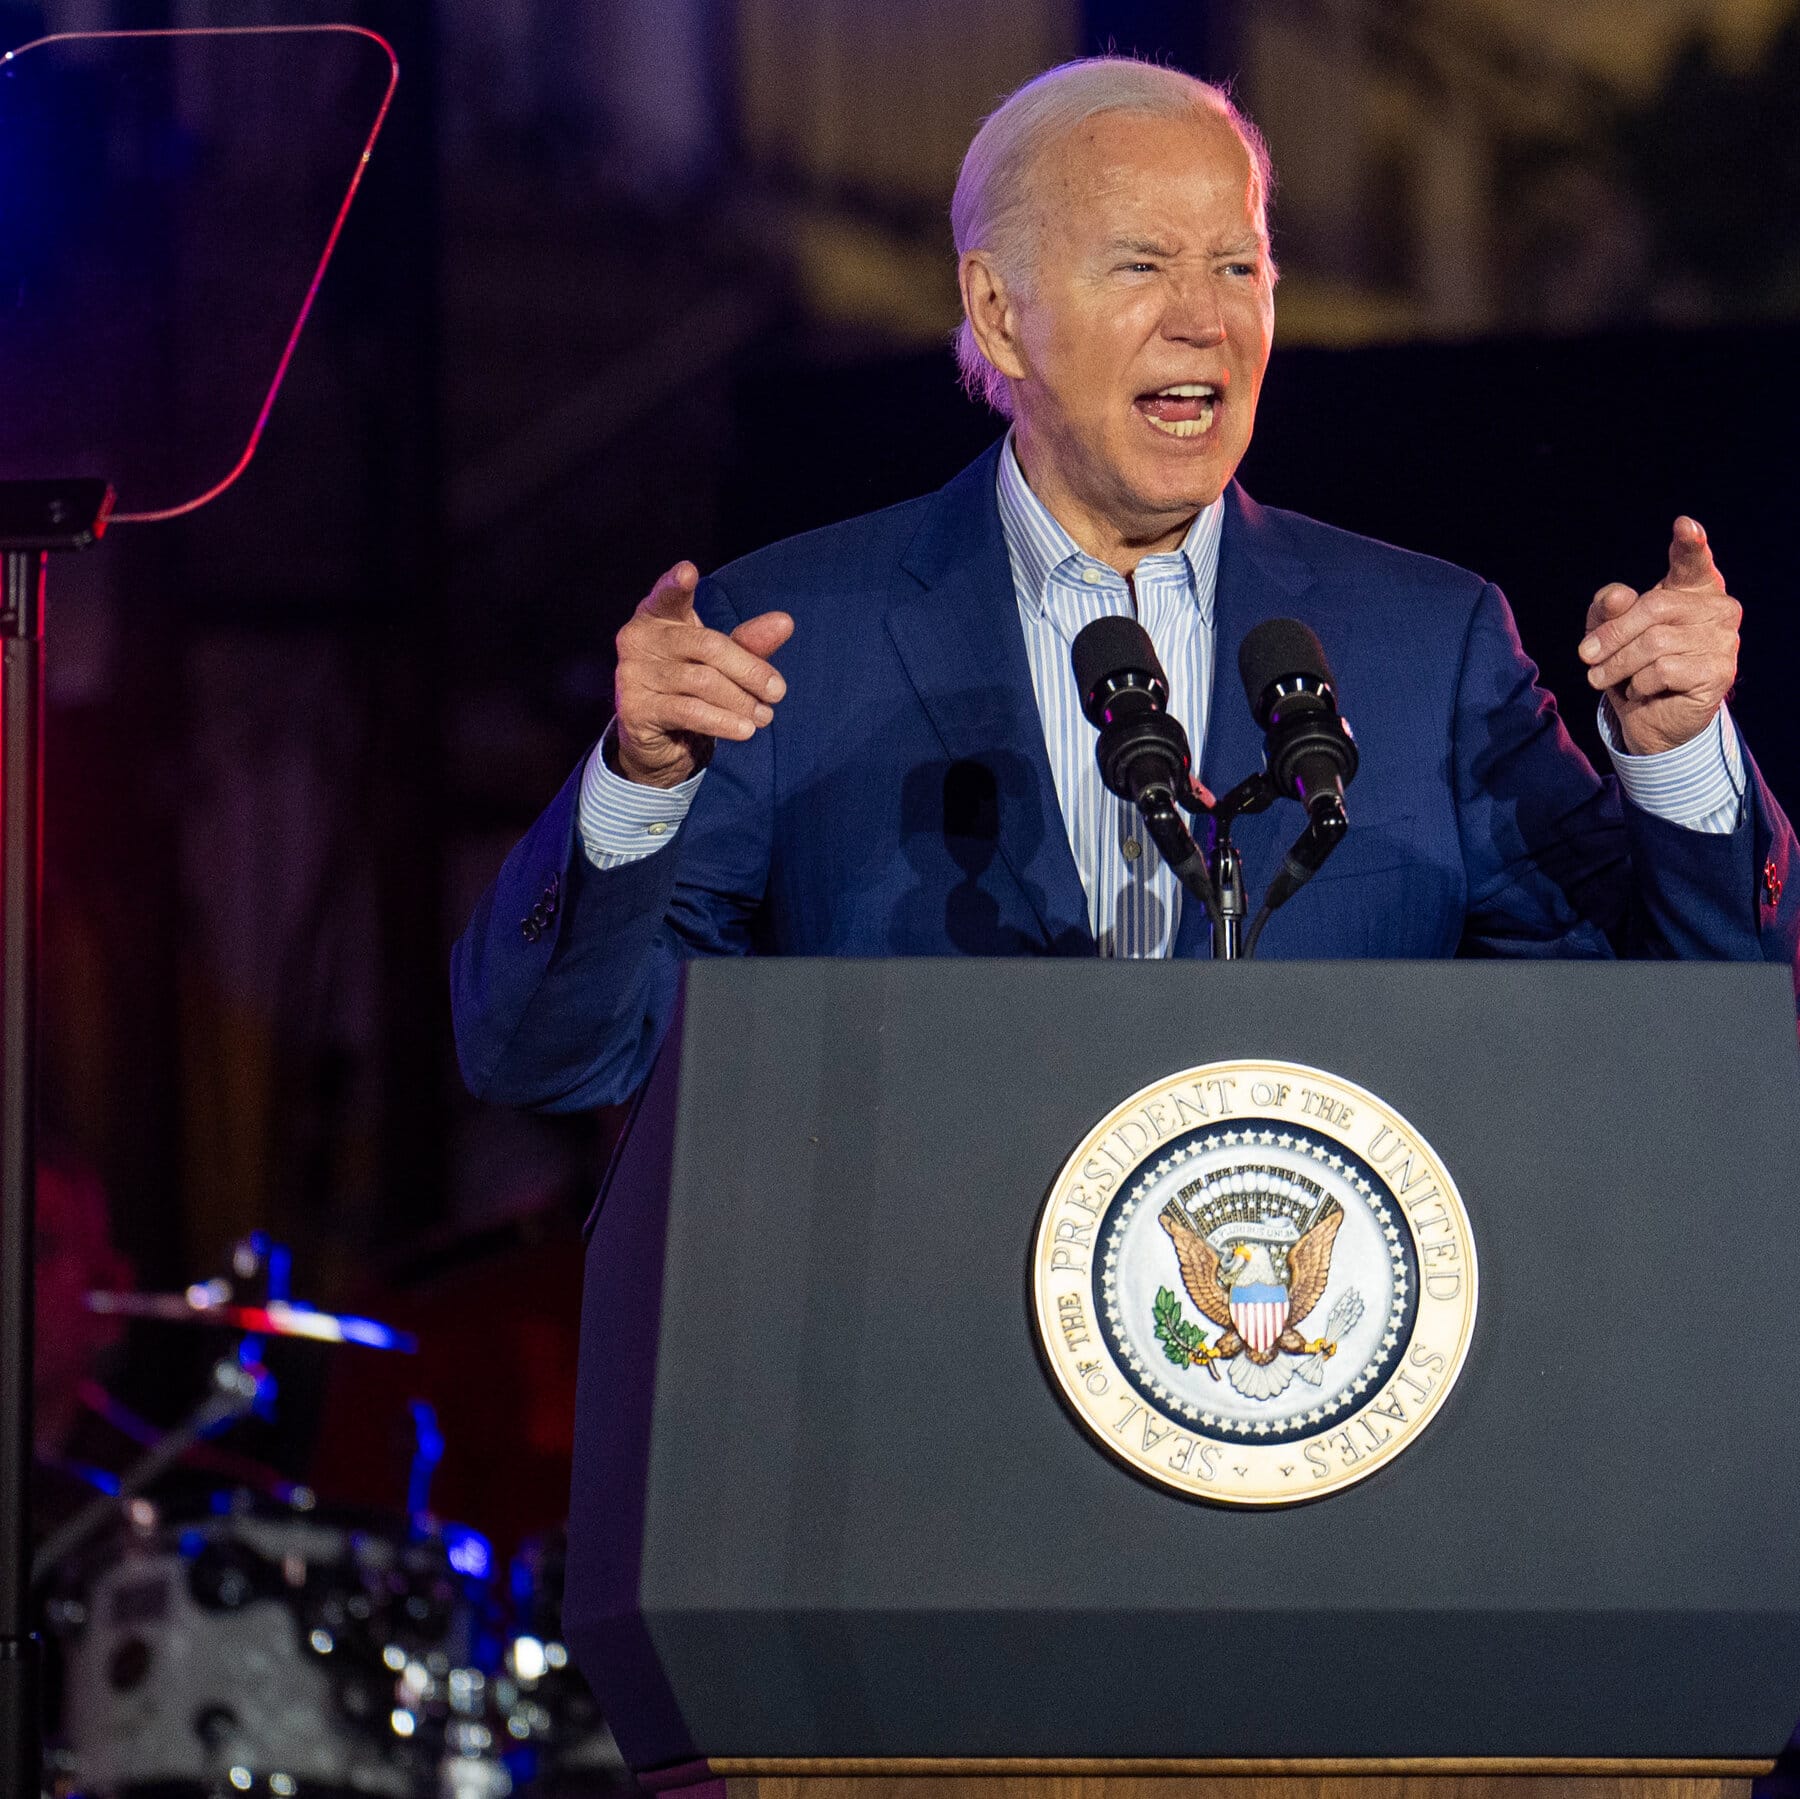 Biden, Honoring Juneteenth, Warns of Danger of ‘Old Ghosts in New Garments’